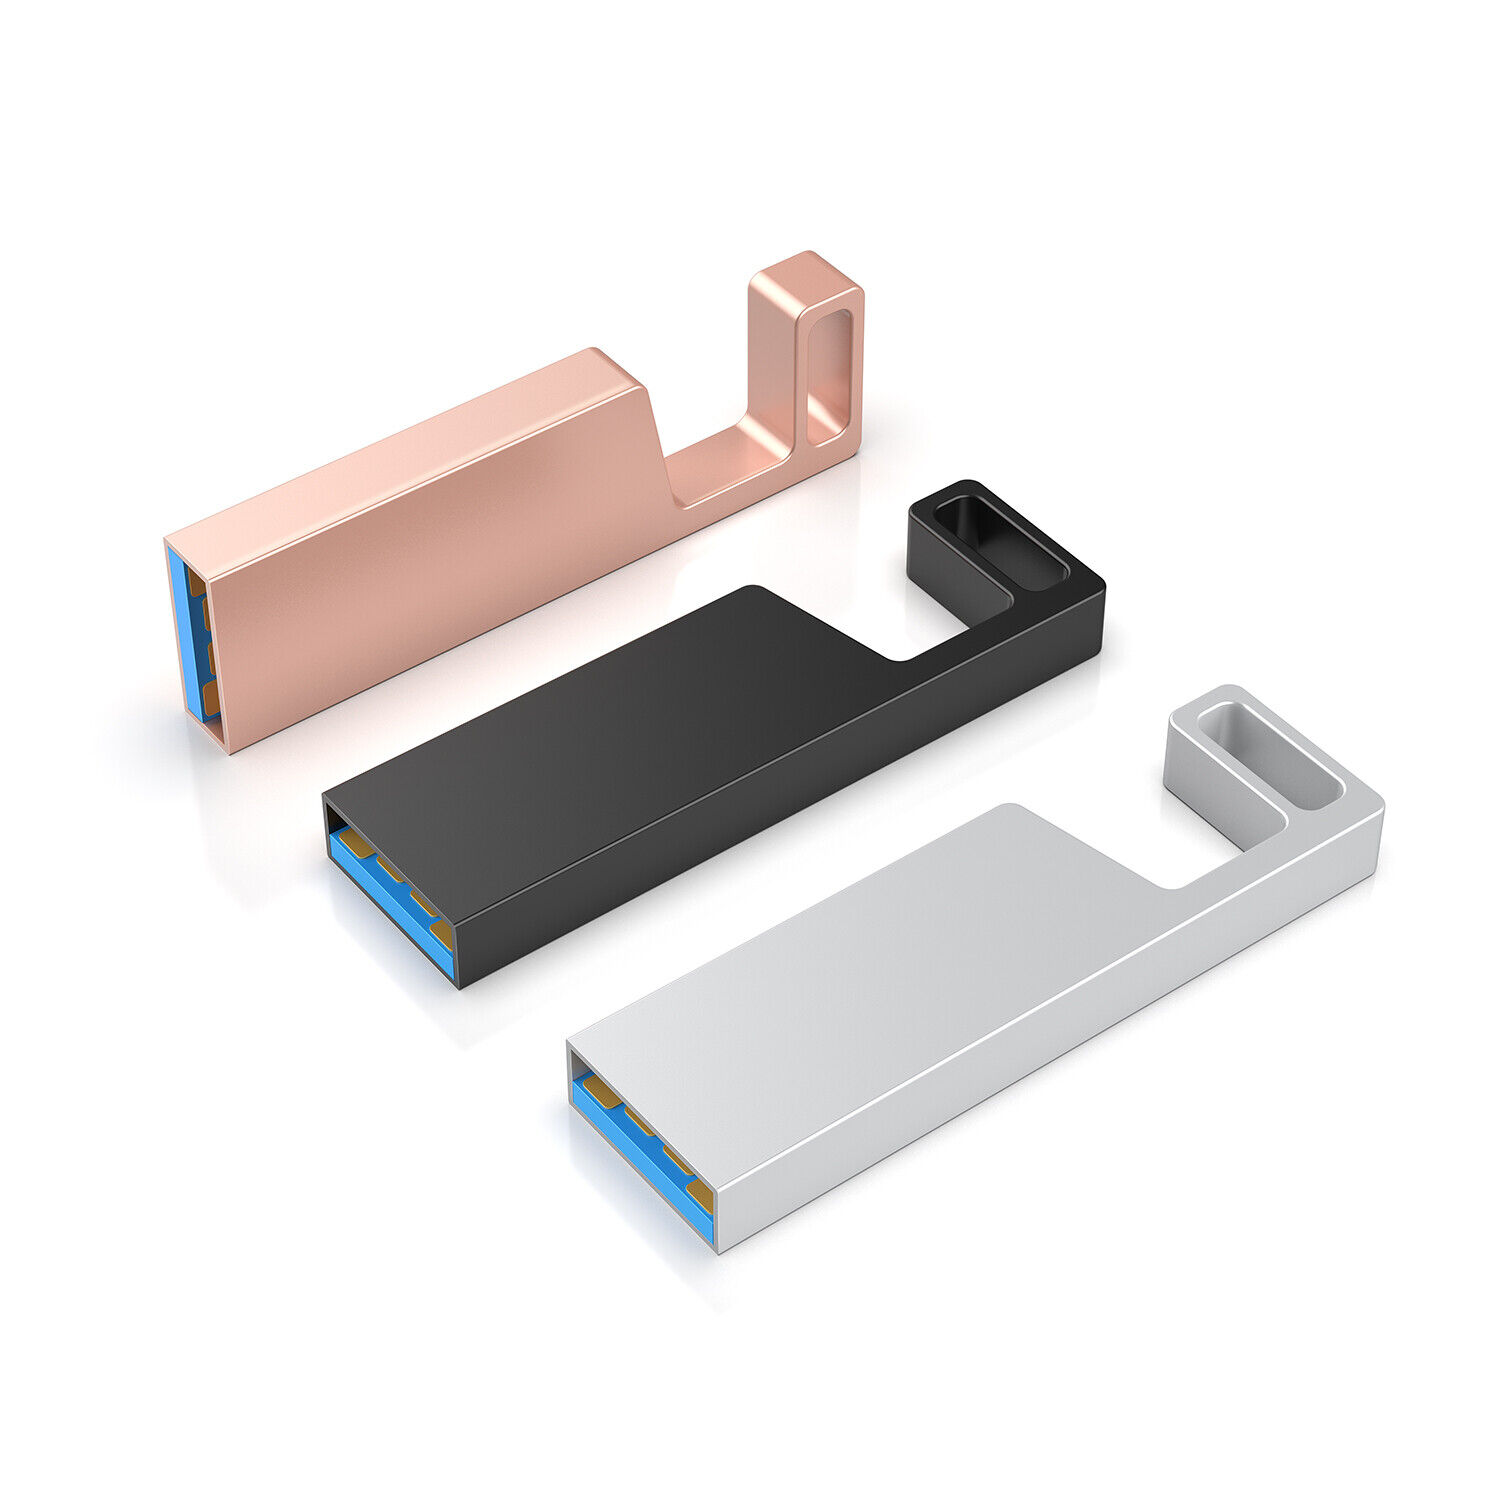 3x 16GB High Speed USB 3.0 Metal Waterproof Flash Drives Key Shaped Memory Stick